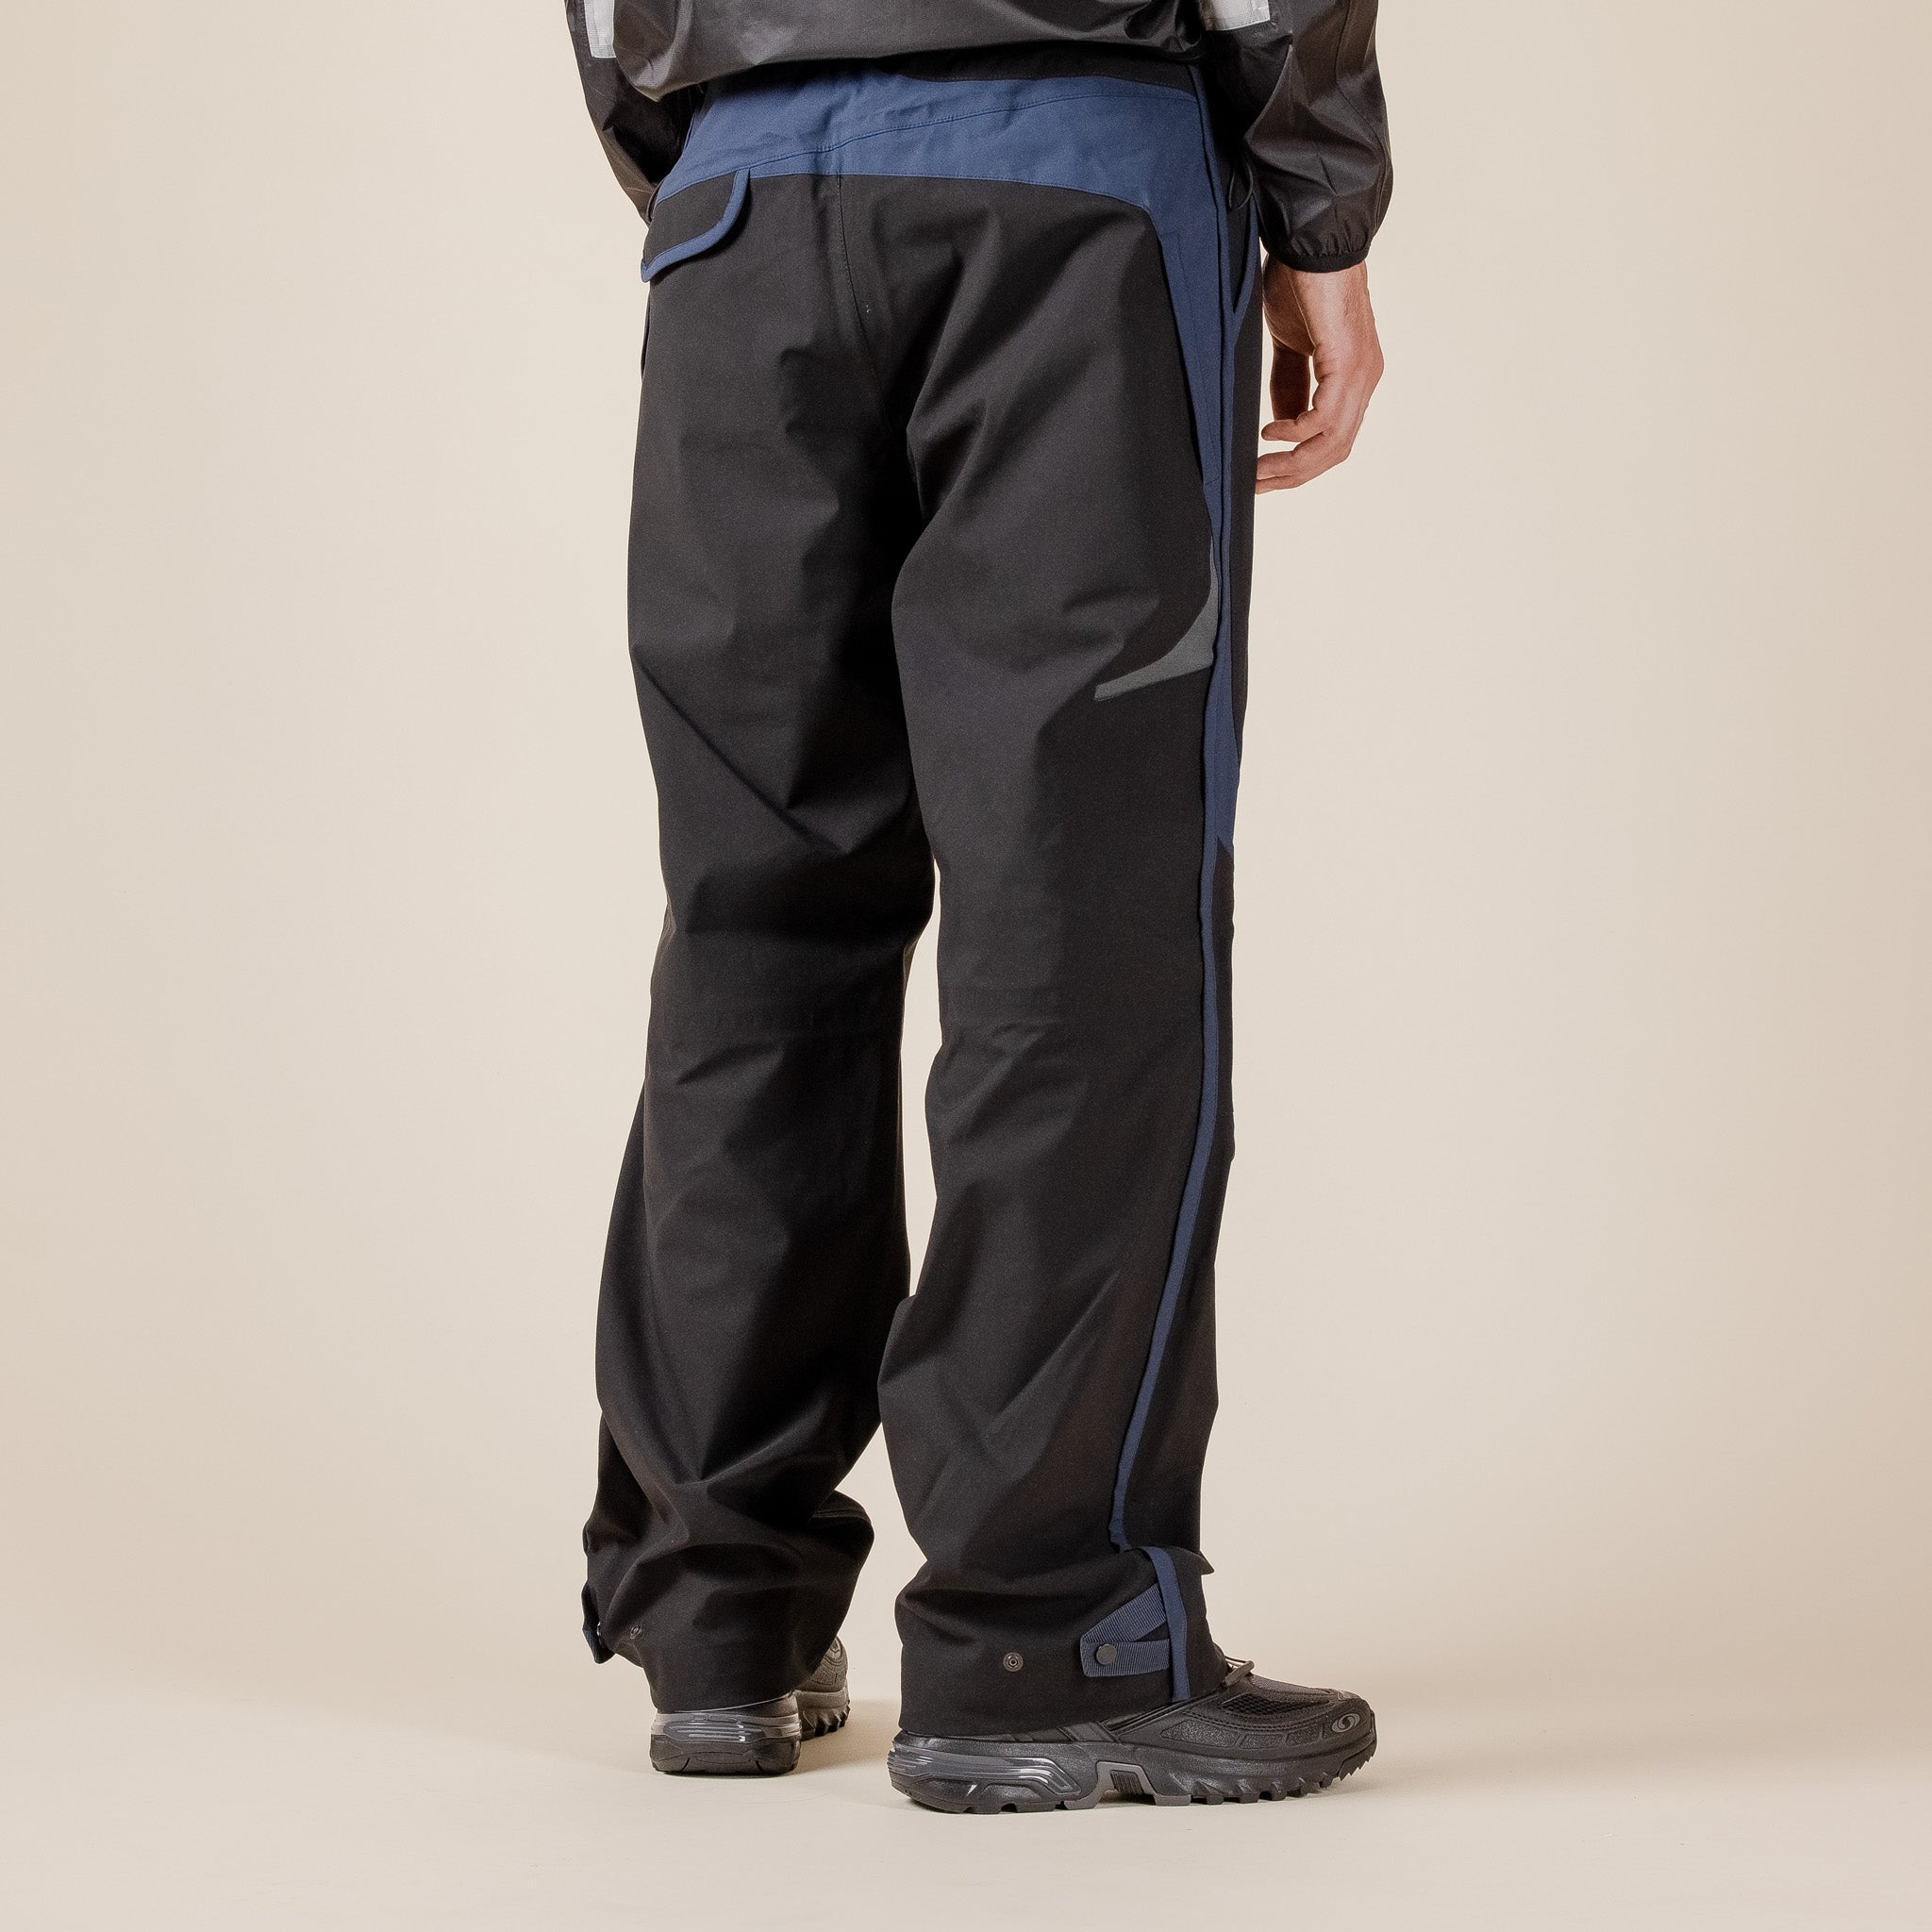  J EONGL I - Uniform Hardshell Pants - Black "J EONGL I stockists" "J EONGL I"